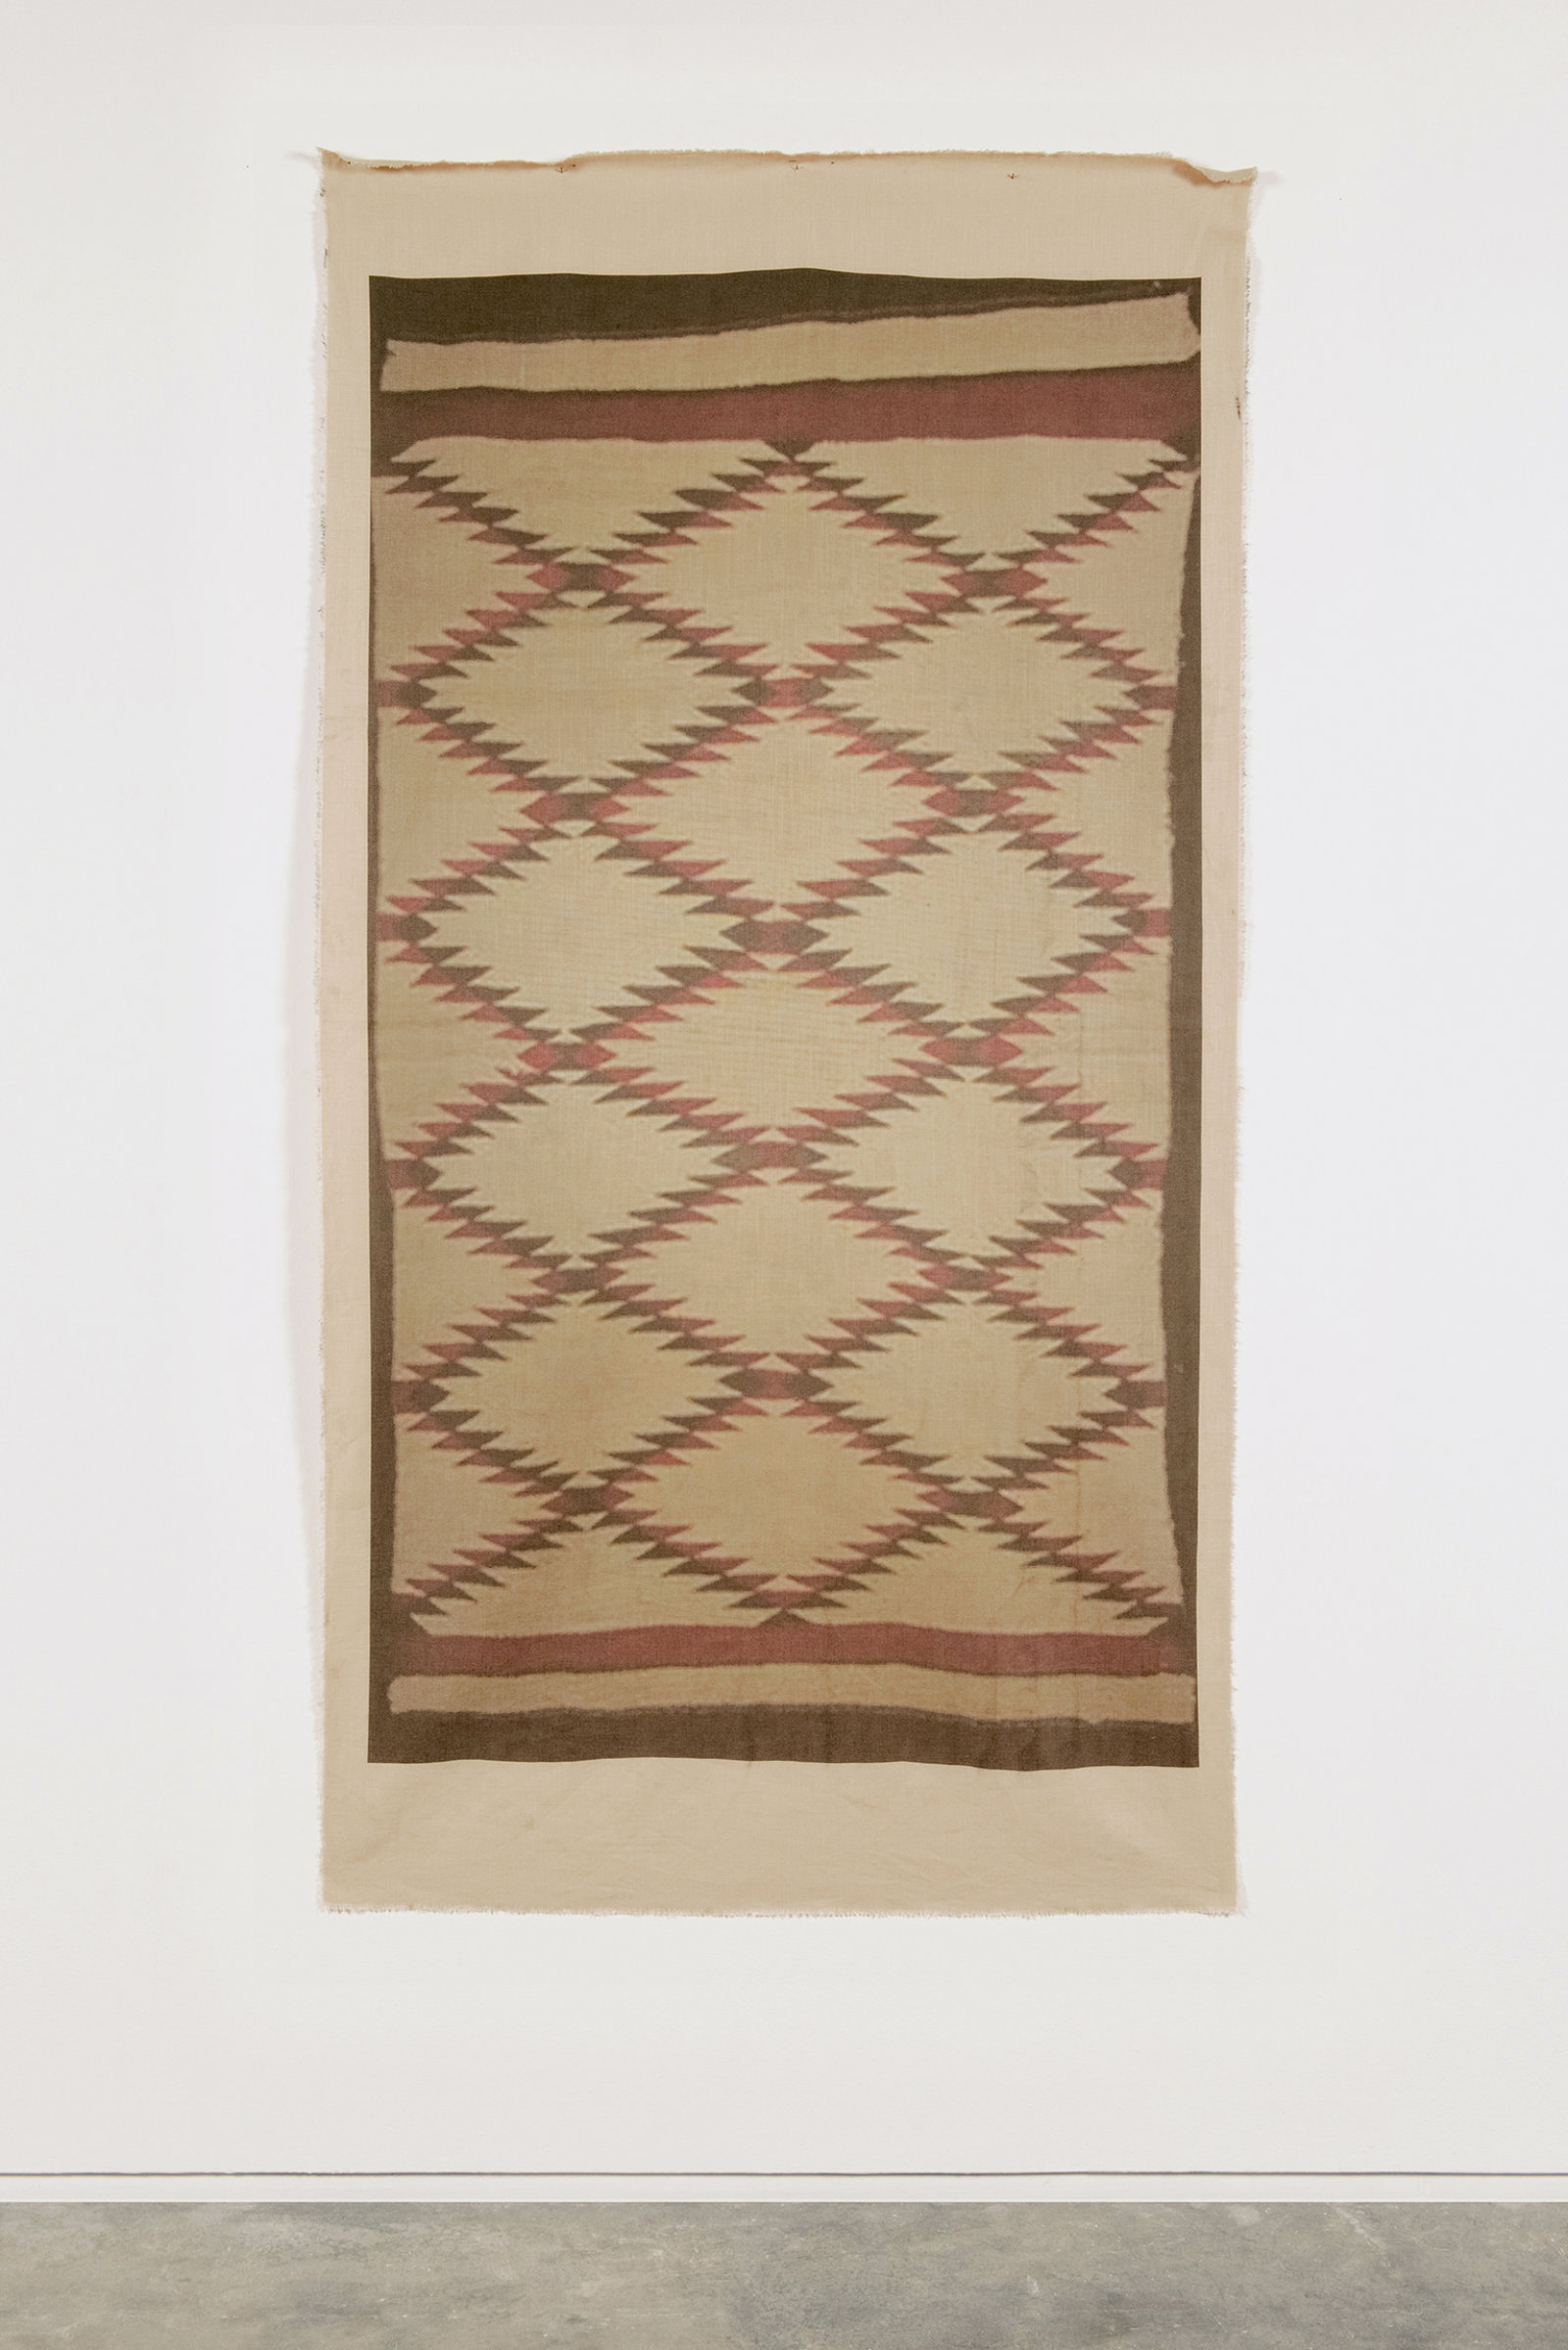 Duane Linklater, UMFA 1993.005.001, 2015, inkjet print on linen, nails, from Navajo Serape, Utah Museum of Fine Arts Collection, 85 x 44 in. (216 x 112 cm)